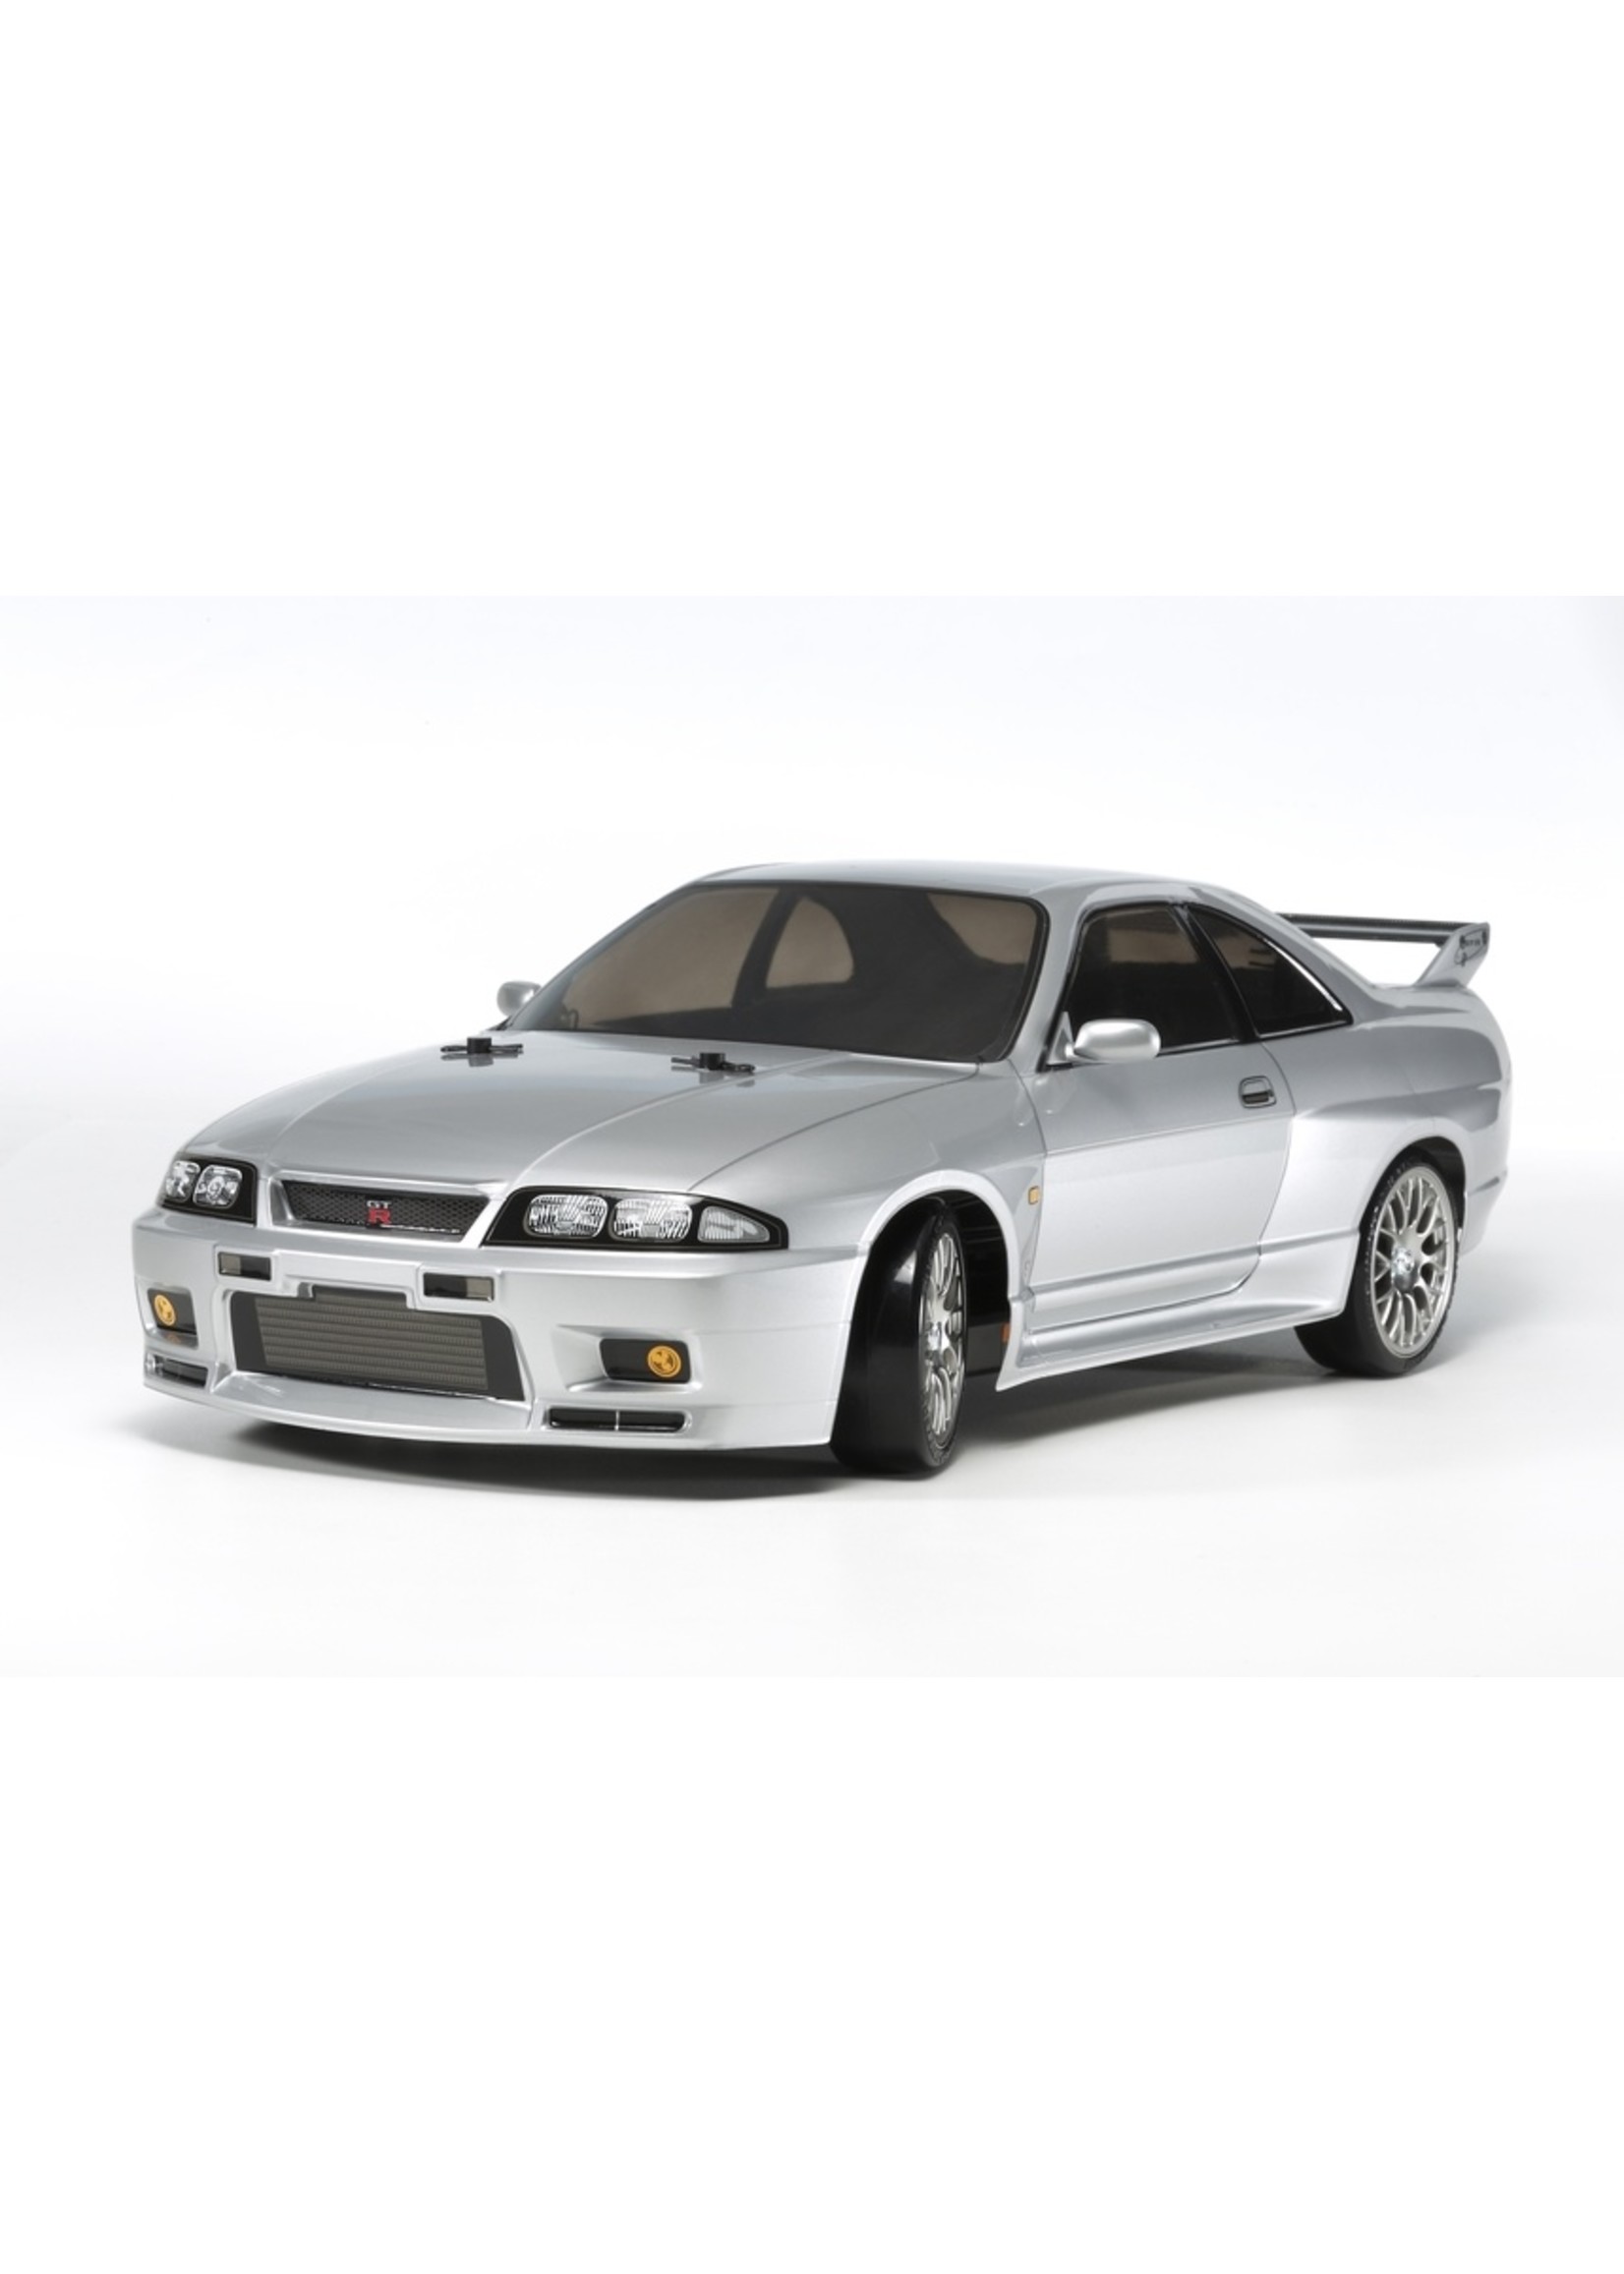 Tamiya 1/10 Nissan Skyline GT-R R33 - TT-02D Chassis Kit